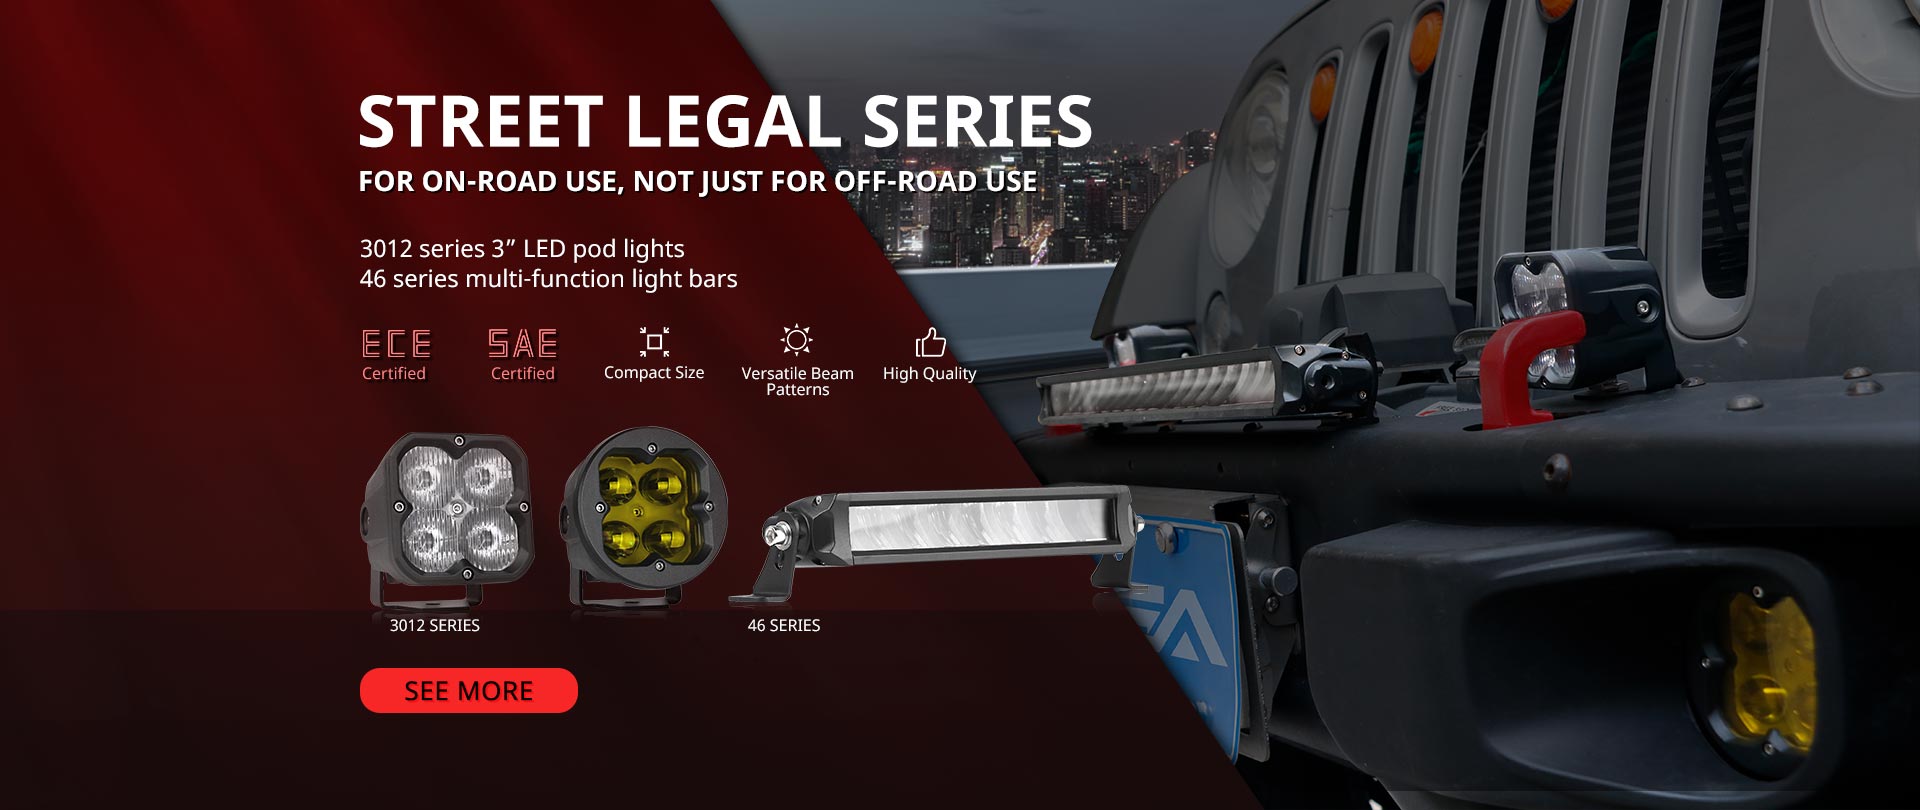 Street legal LED pod lights and light bars